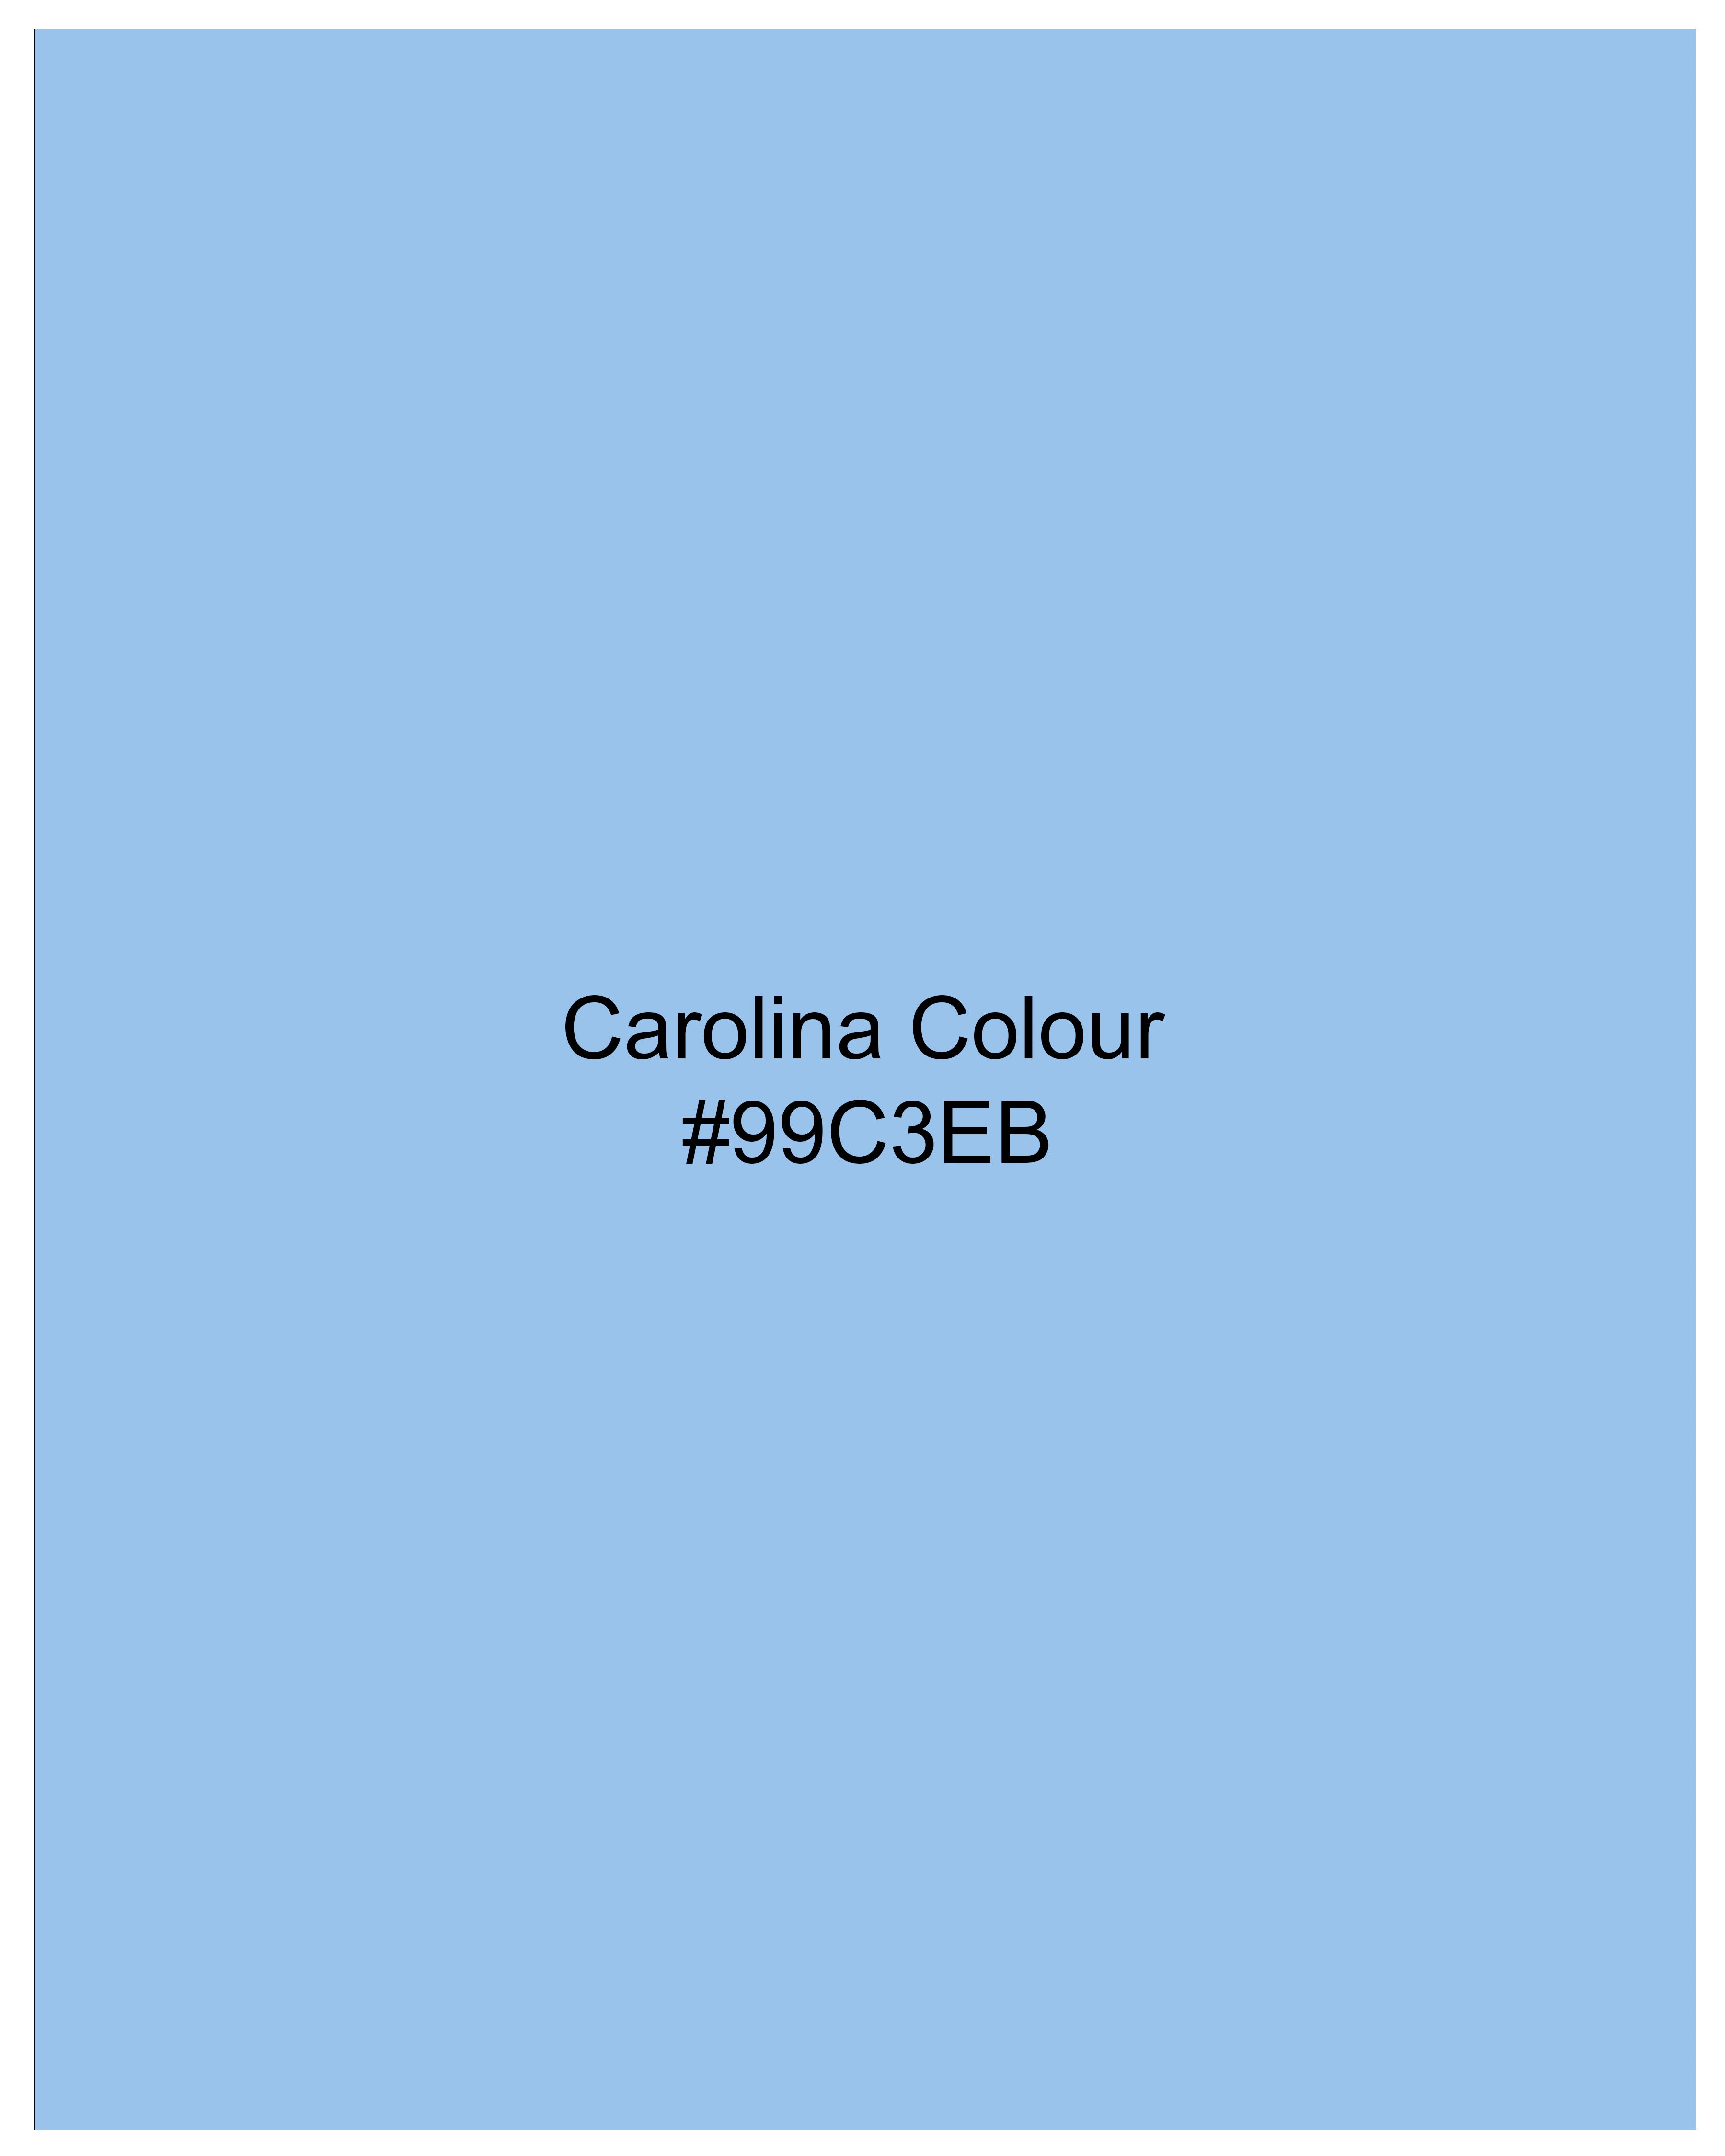 Carolina Blue with White Cuffs and Collar Chambray Shirt 10009-WCC-38, 10009-WCC-H-38, 10009-WCC-39, 10009-WCC-H-39, 10009-WCC-40, 10009-WCC-H-40, 10009-WCC-42, 10009-WCC-H-42, 10009-WCC-44, 10009-WCC-H-44, 10009-WCC-46, 10009-WCC-H-46, 10009-WCC-48, 10009-WCC-H-48, 10009-WCC-50, 10009-WCC-H-50, 10009-WCC-52, 10009-WCC-H-52